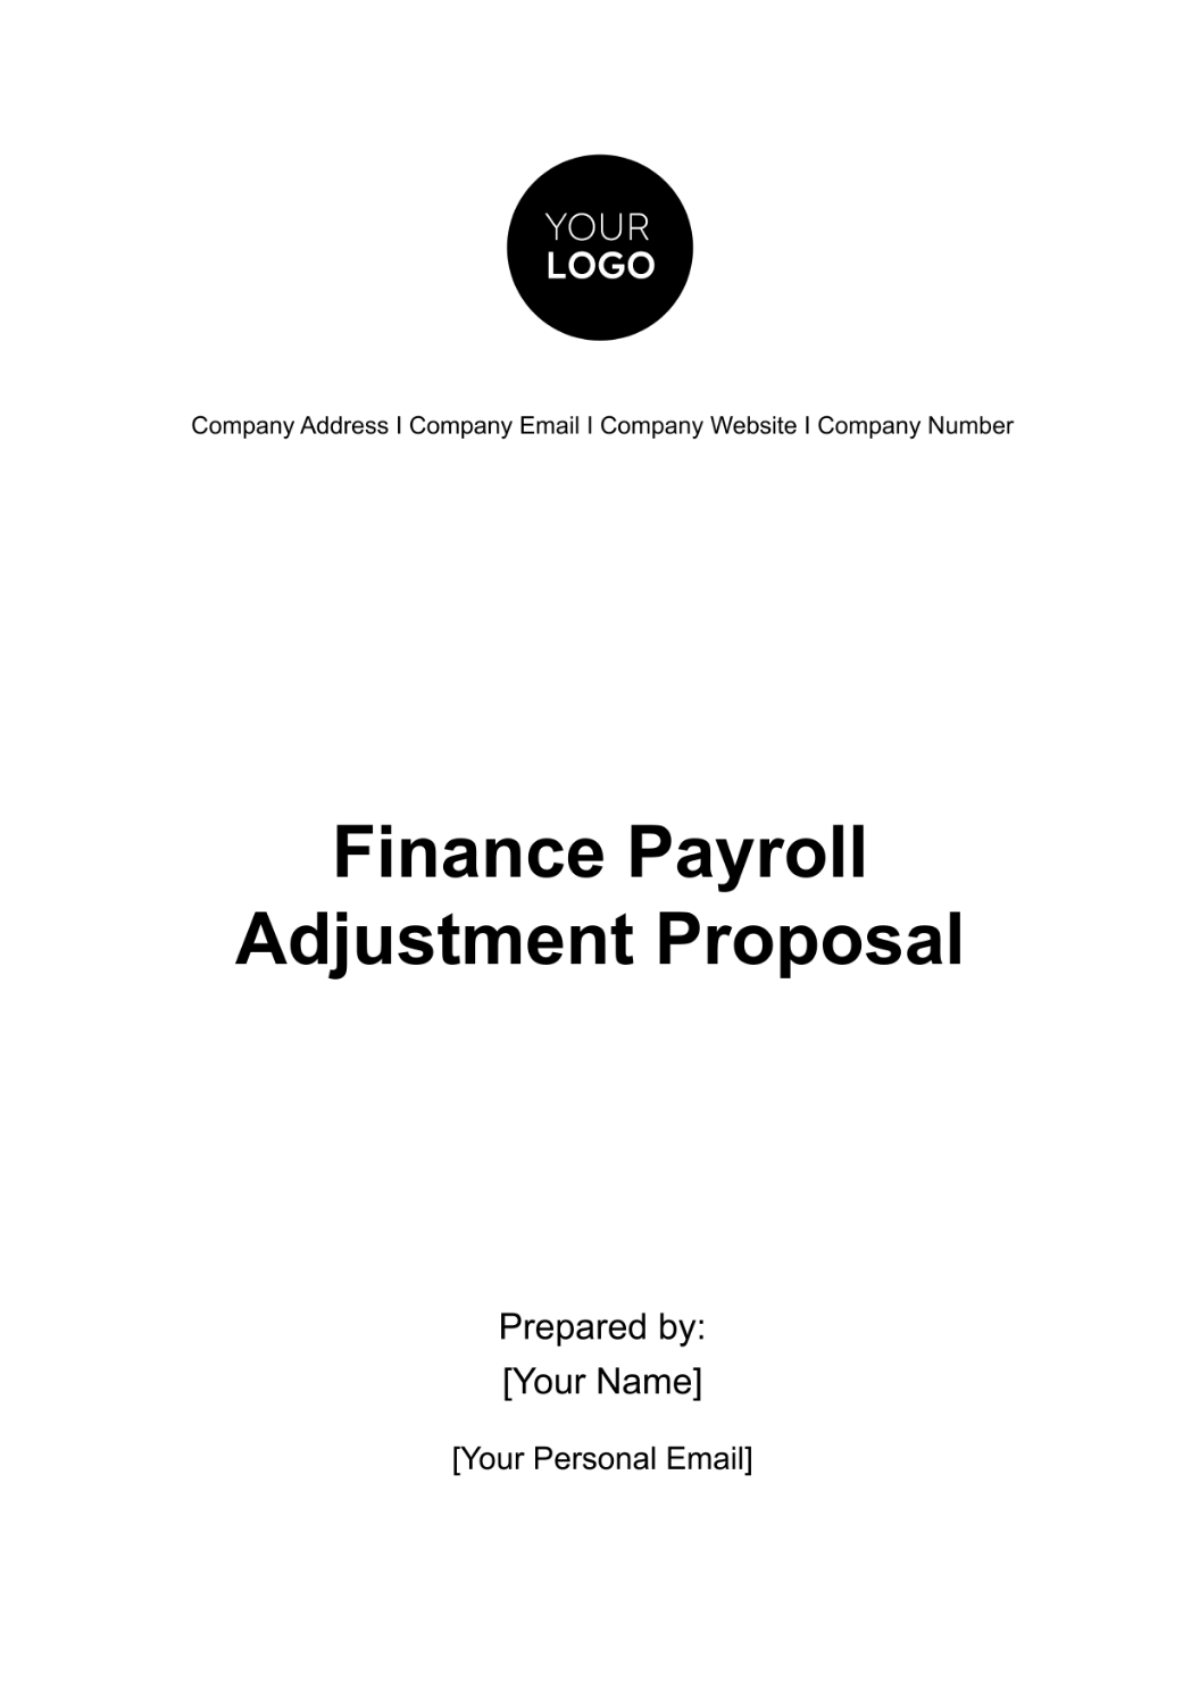 Finance Payroll Adjustment Proposal Template